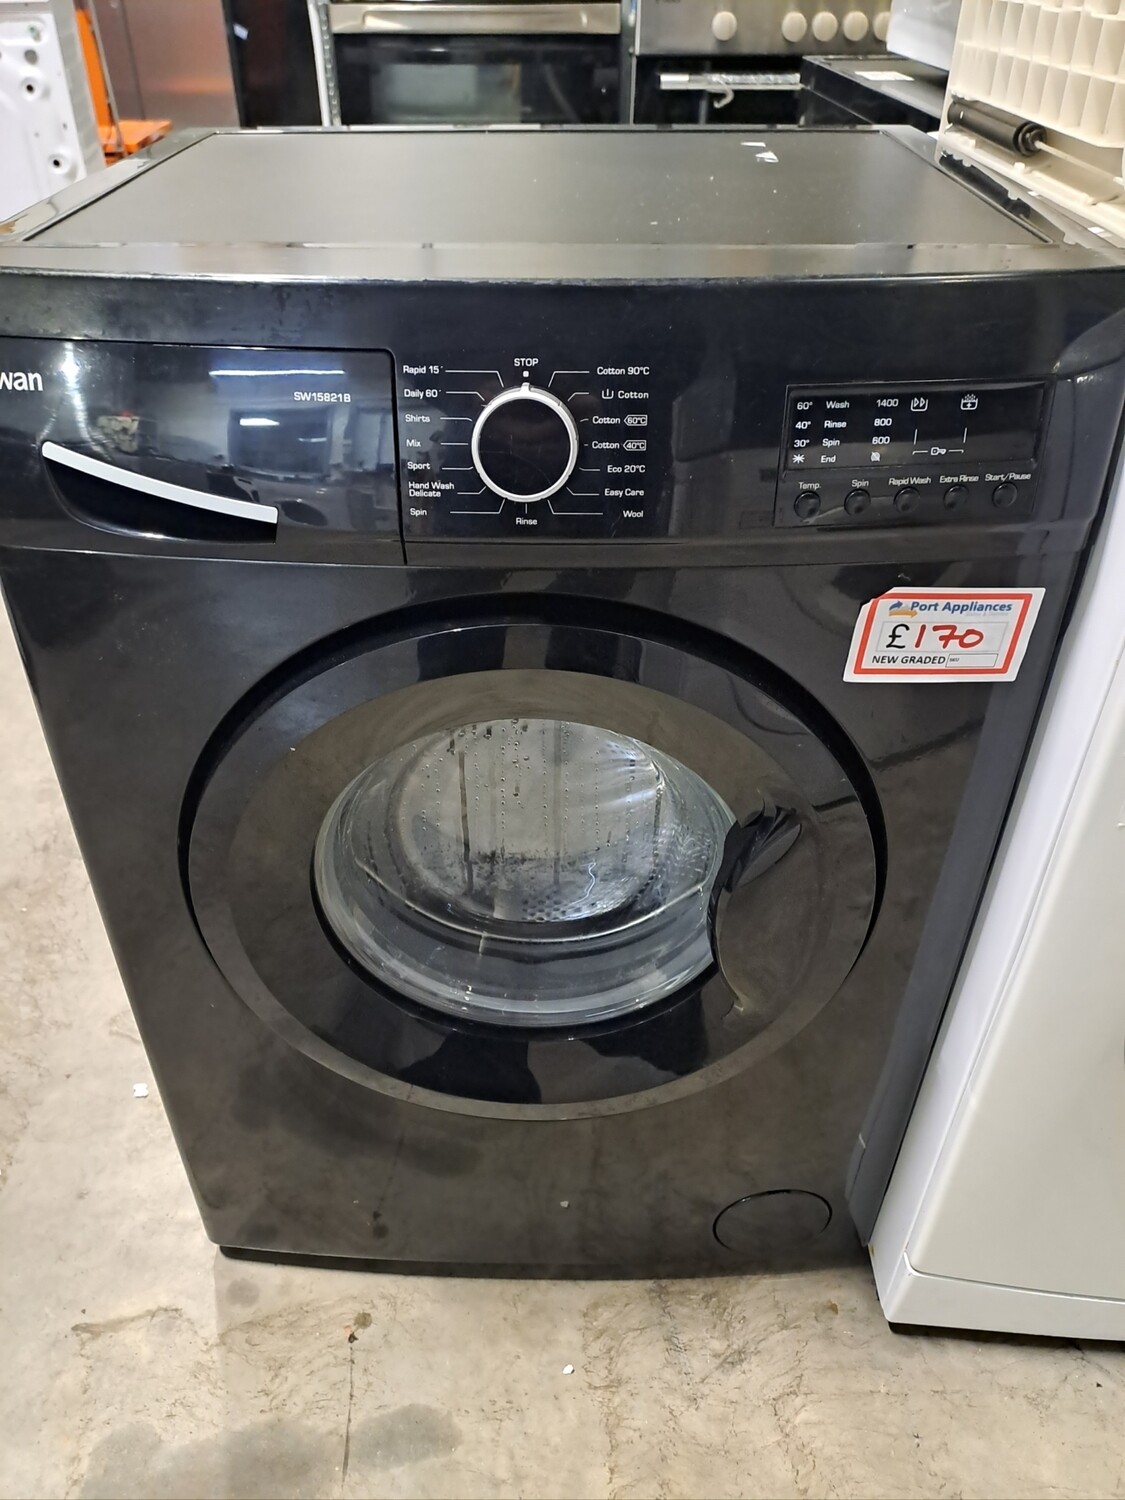 Swan 8kg Load, 1200 Spin Washing Machine - Black - New Graded + 1 Year Guarantee